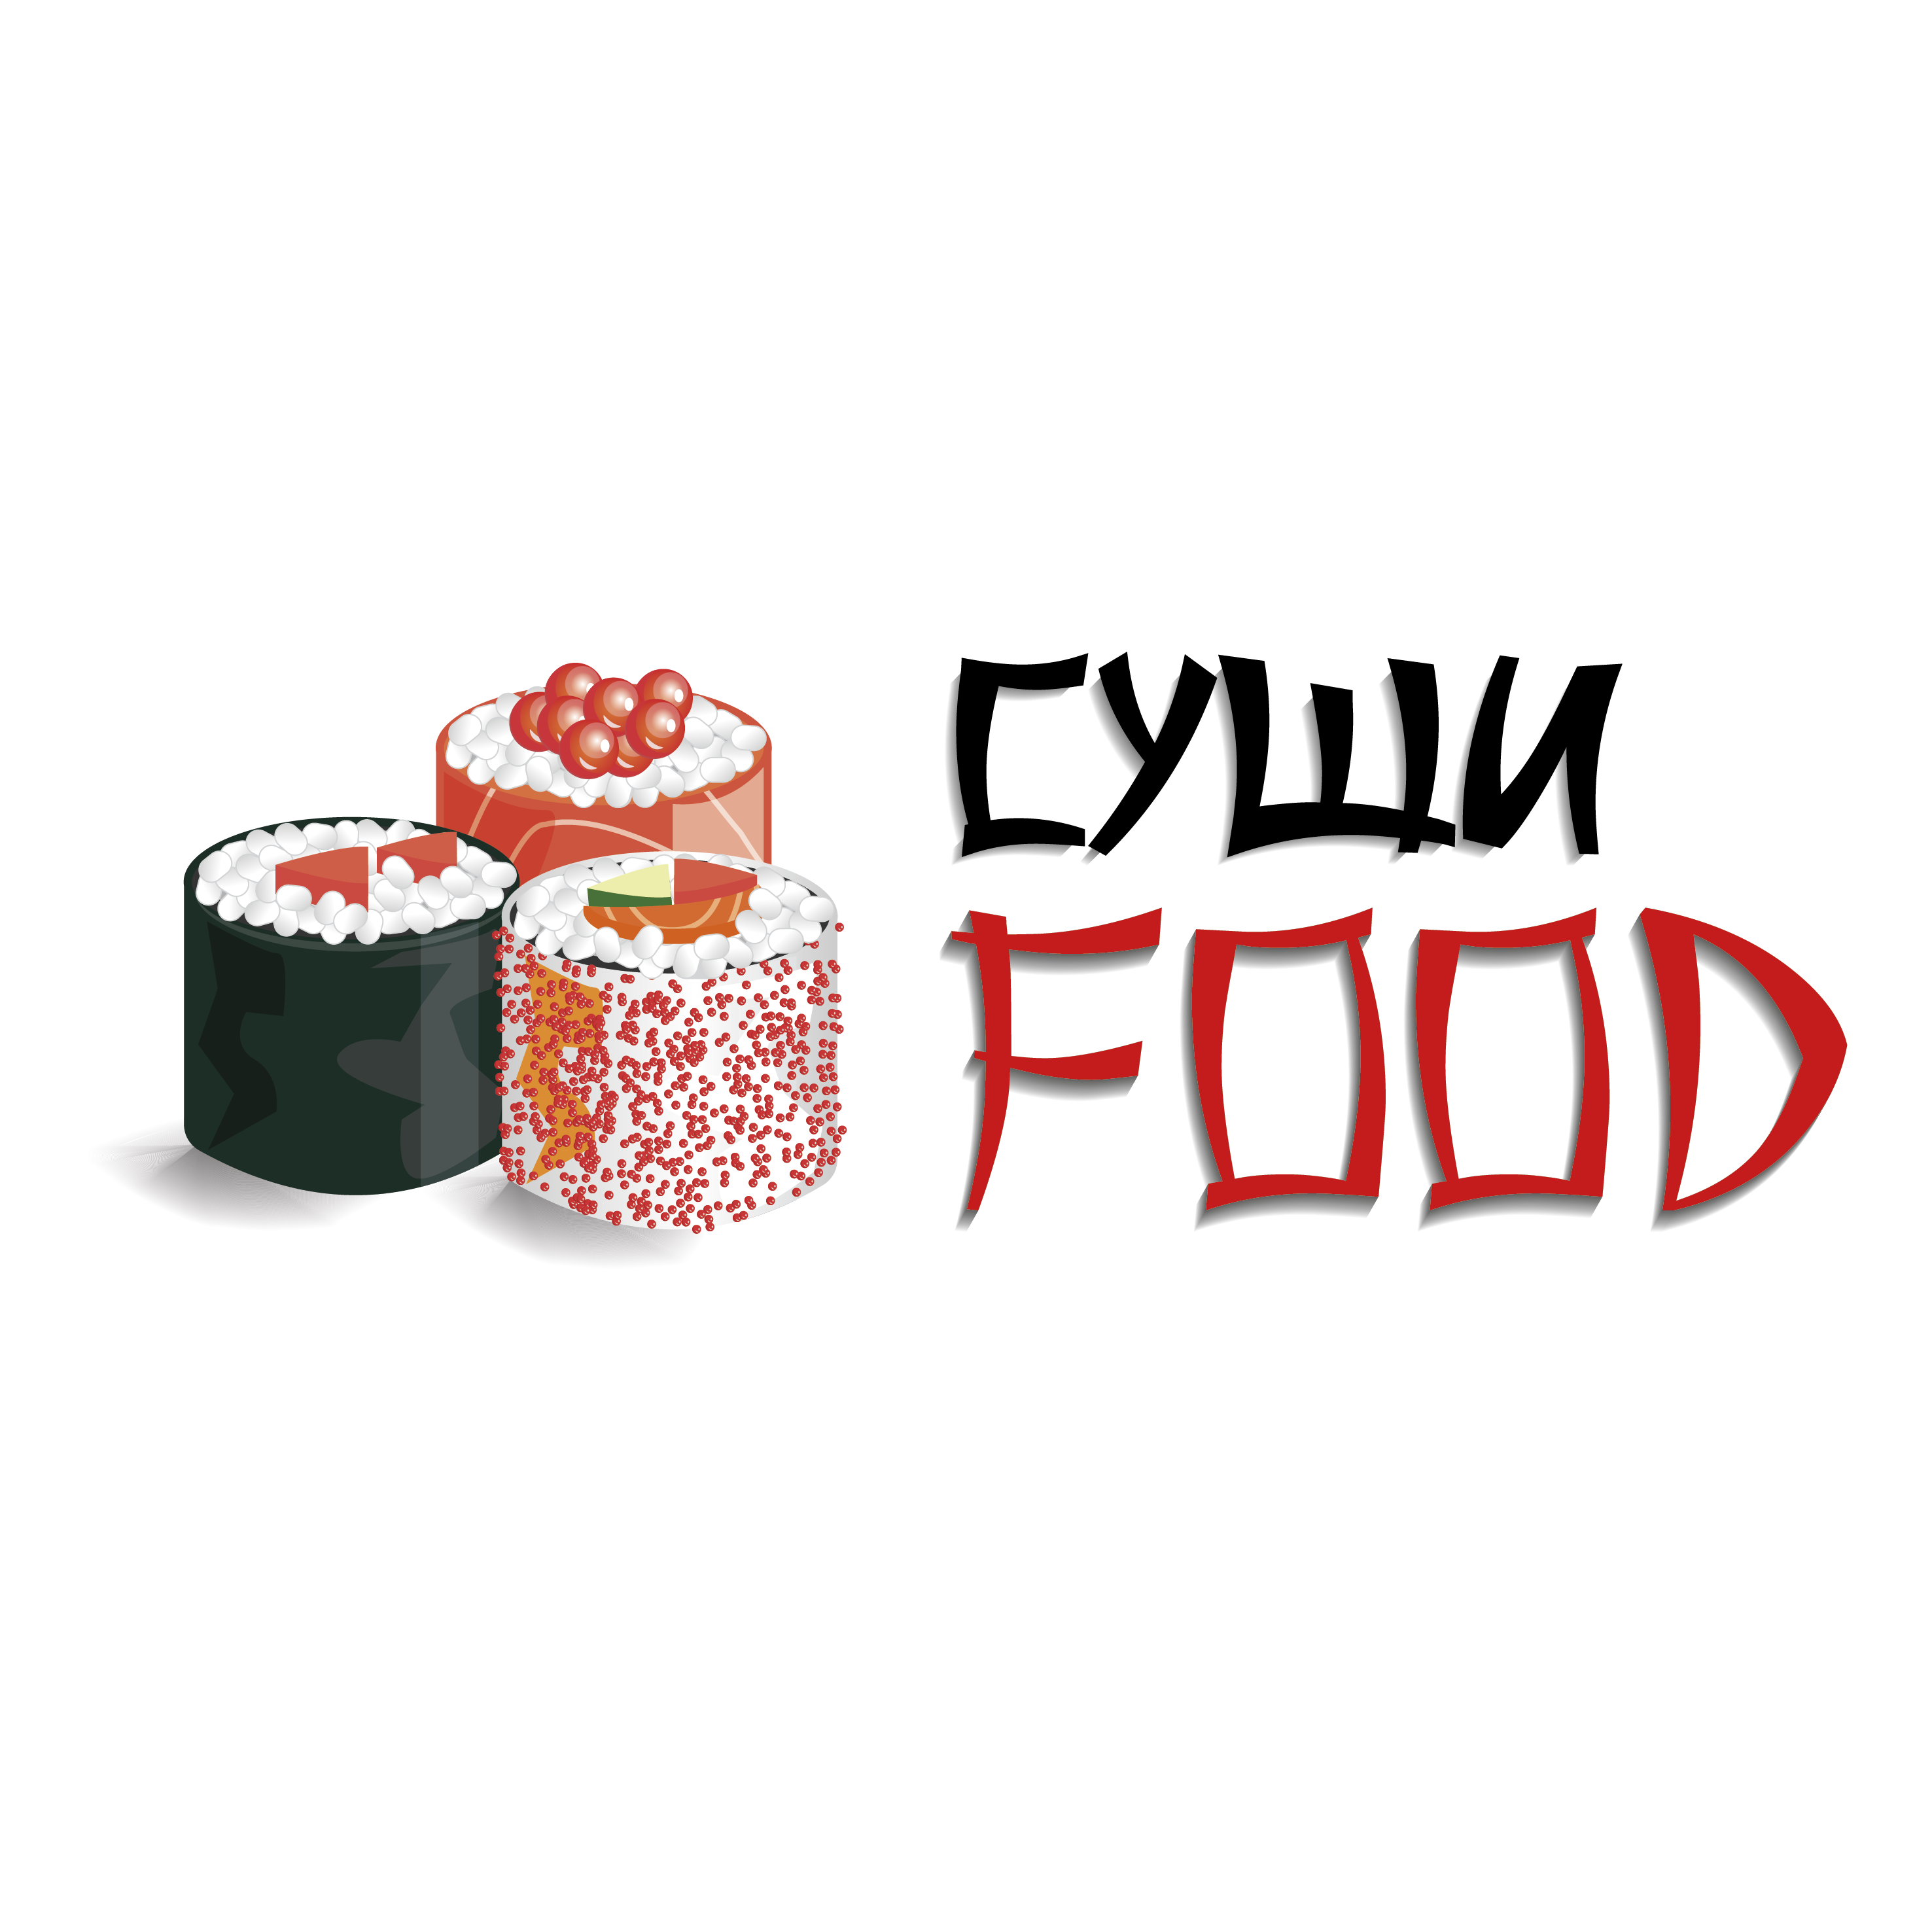 Логотип суши бара. Суши бар Астрахань. Логотип суши роллы. Логотипы суши ресторанов.